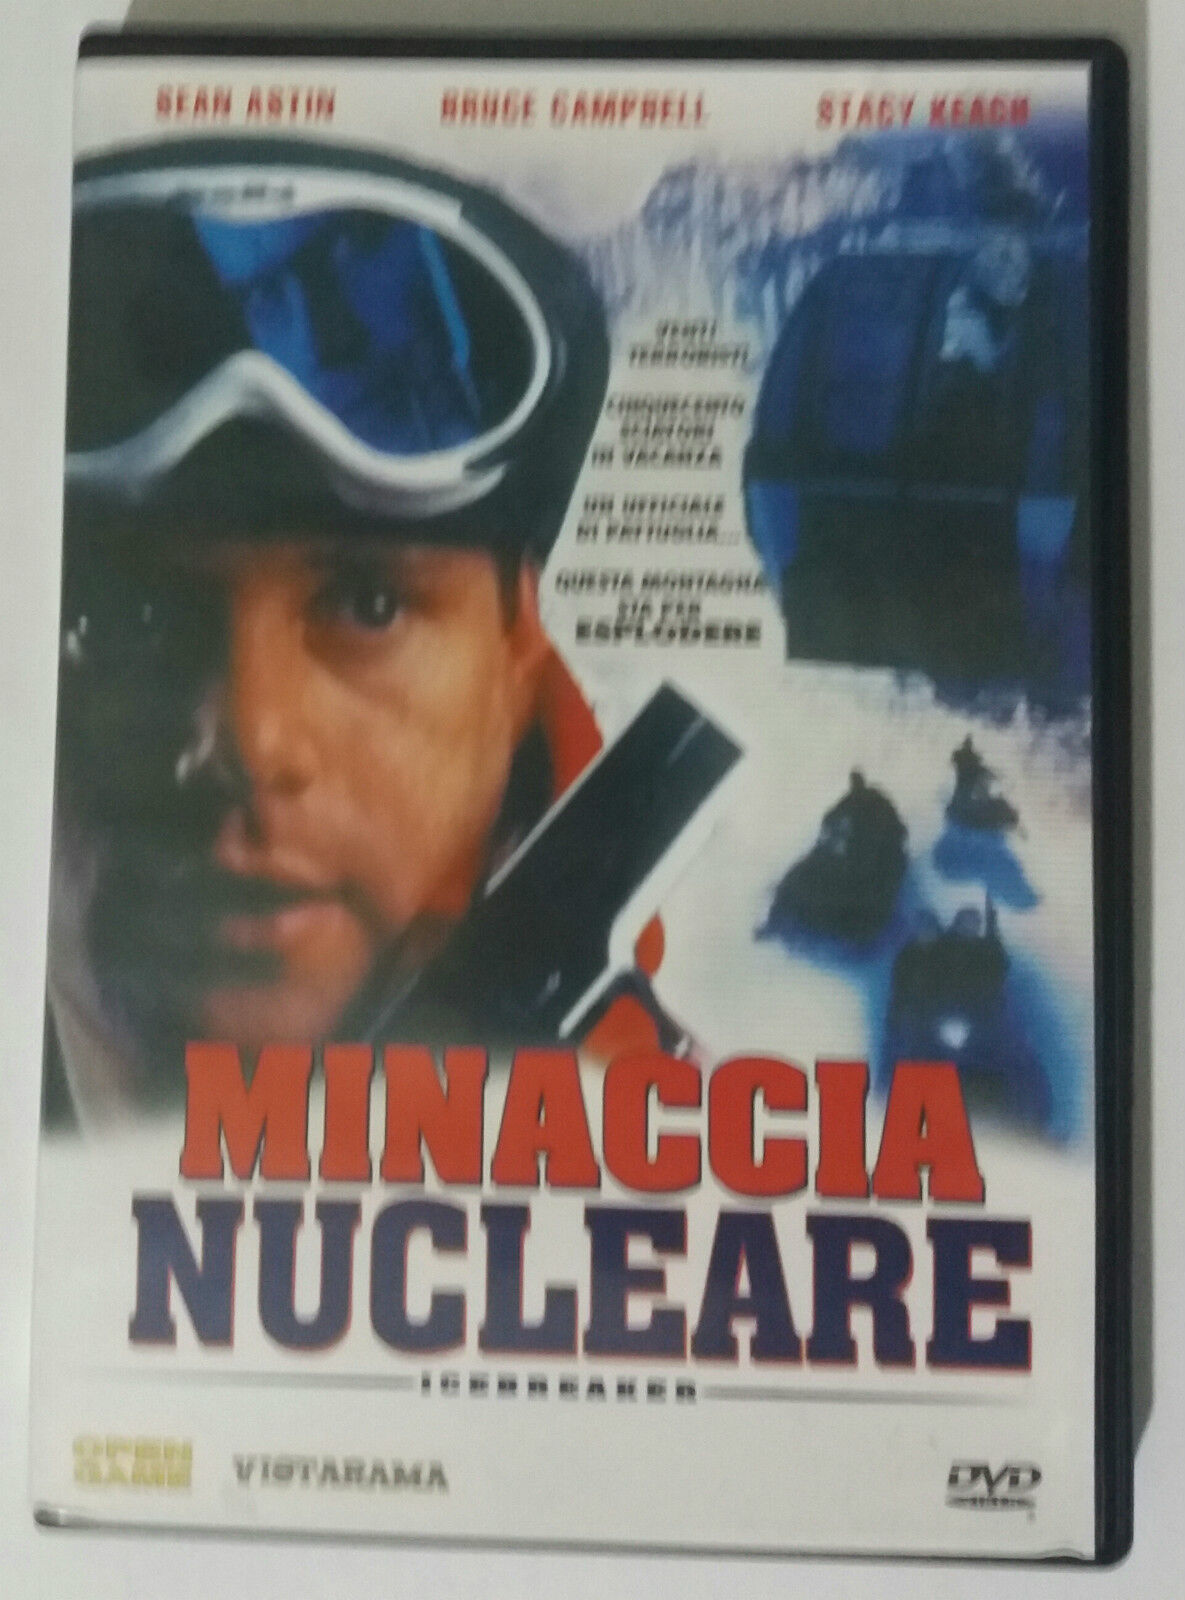 Minaccia nucleare - David Giancola - Vistarama - 1999 - DVD - G dvd usato